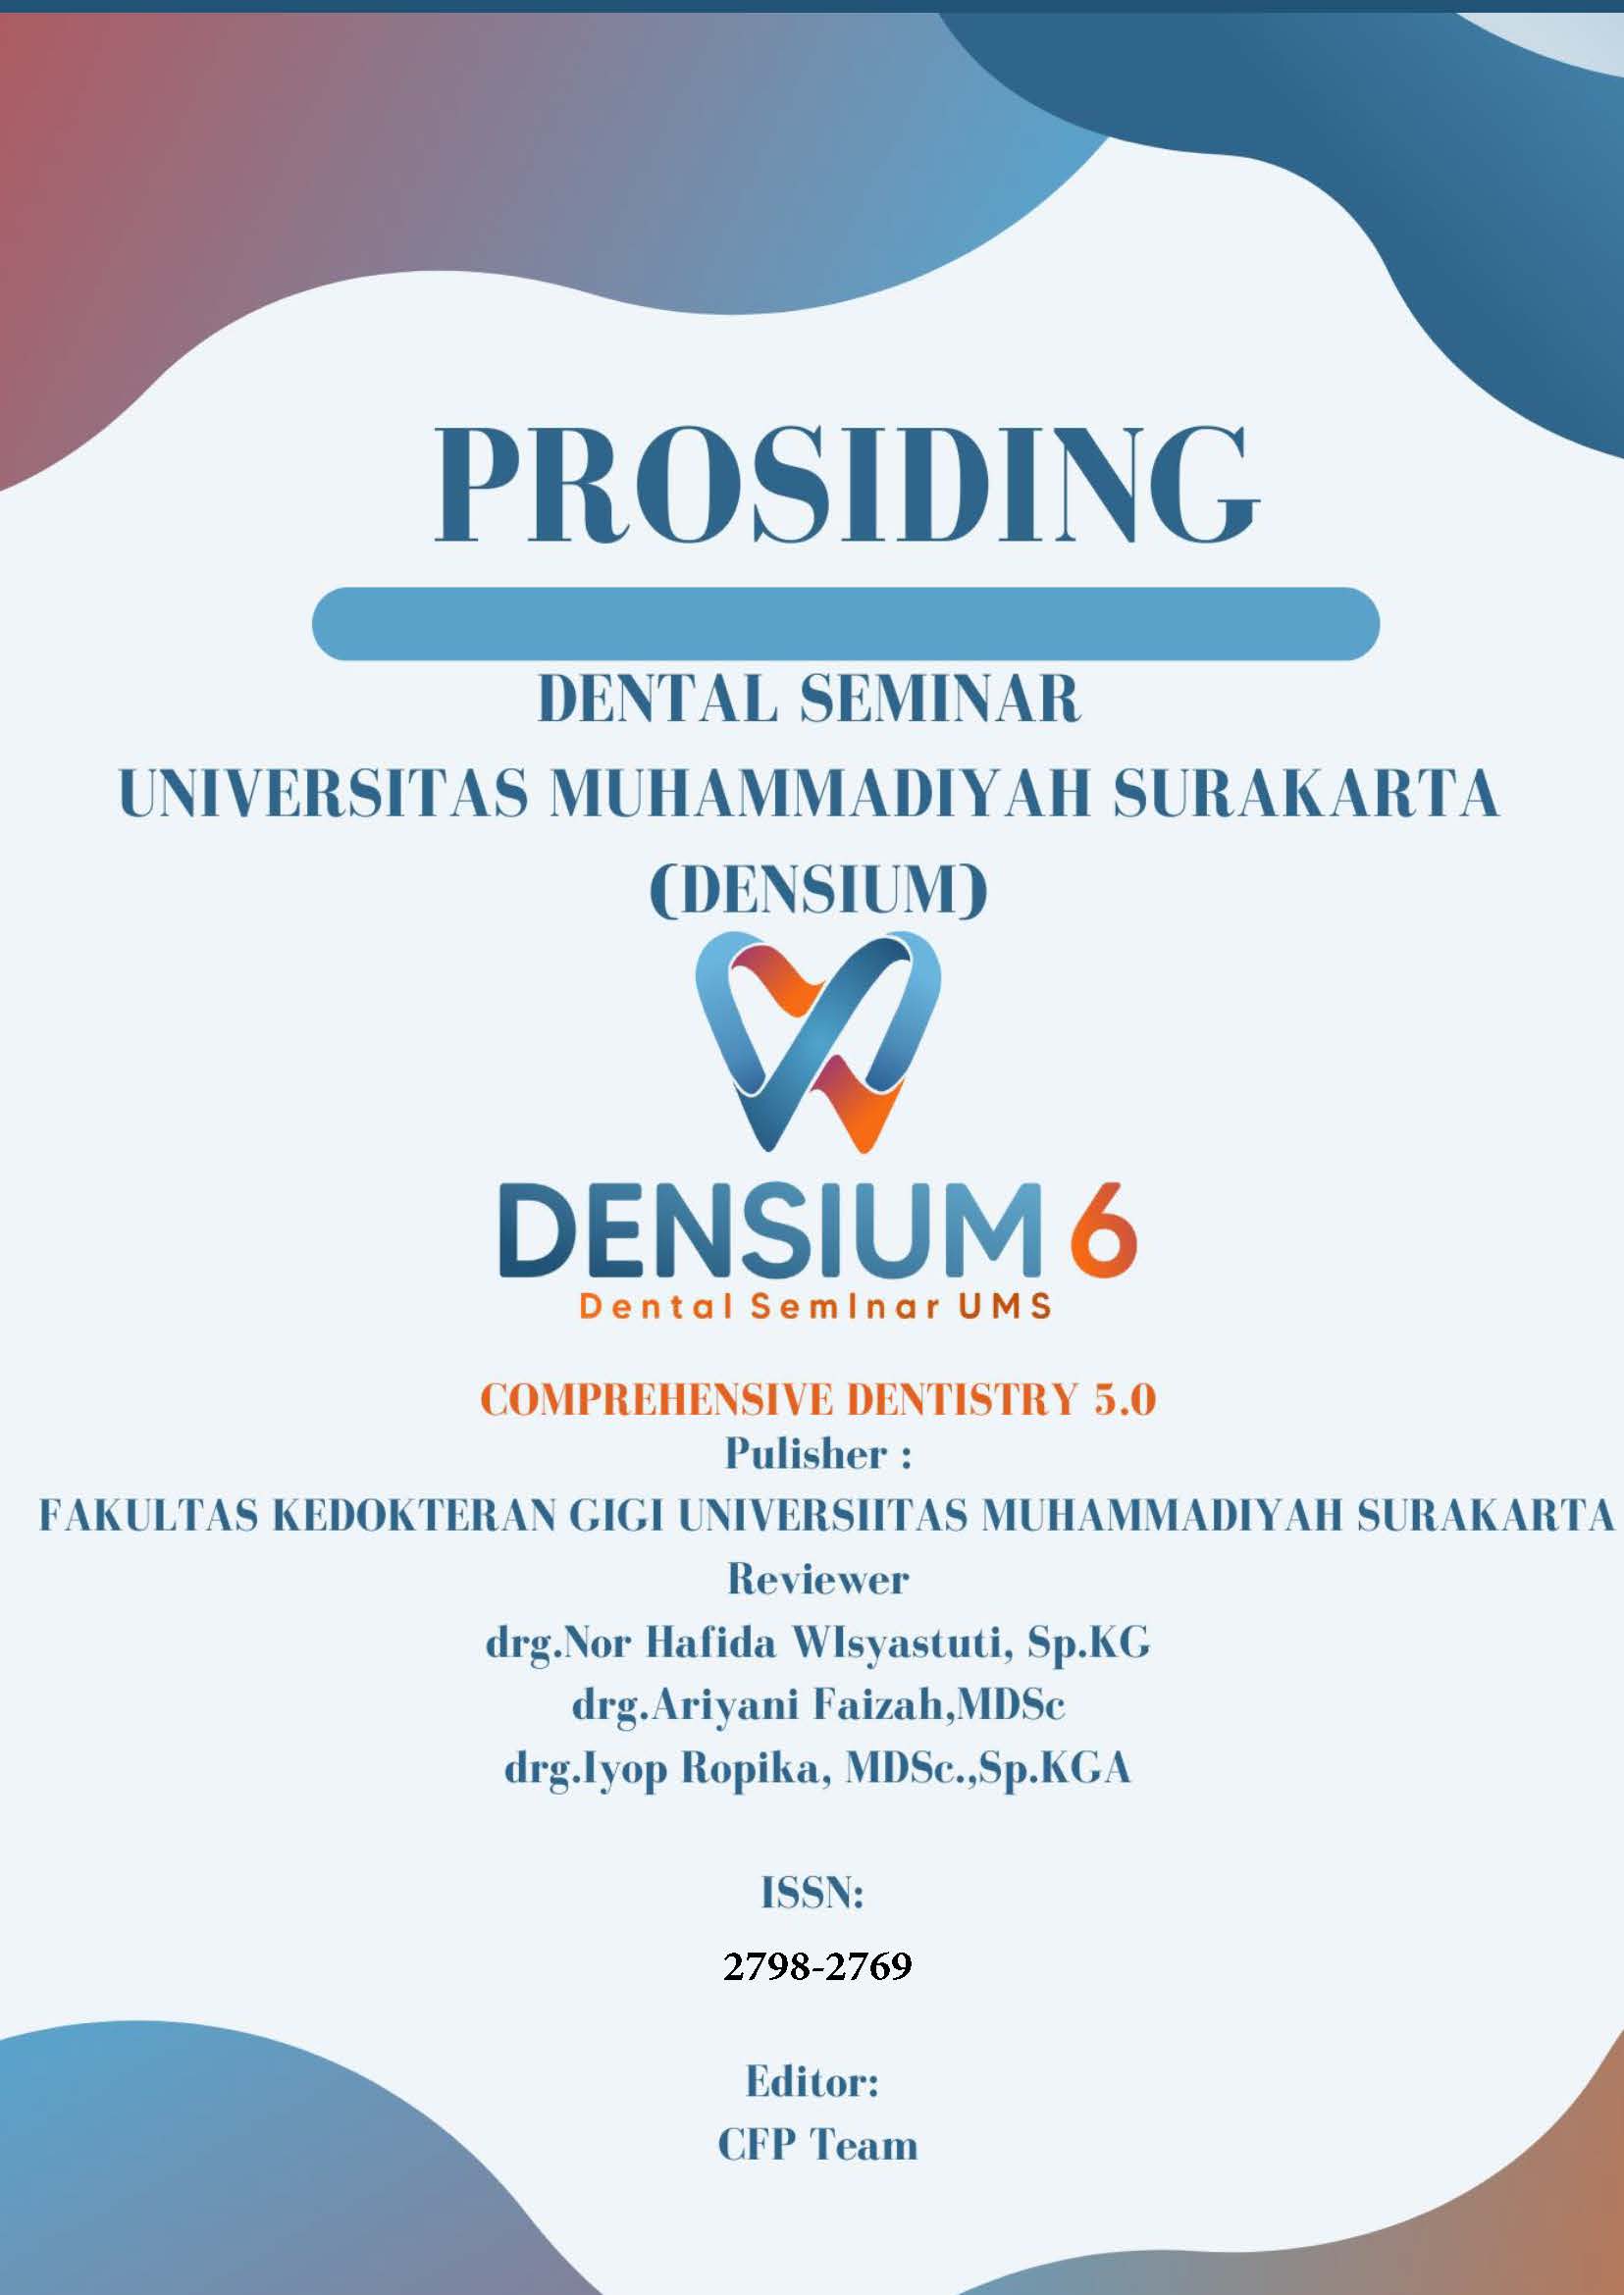 					View 2023: Prosiding Dental Seminar Universitas Muhammadiyah Surakarta
				